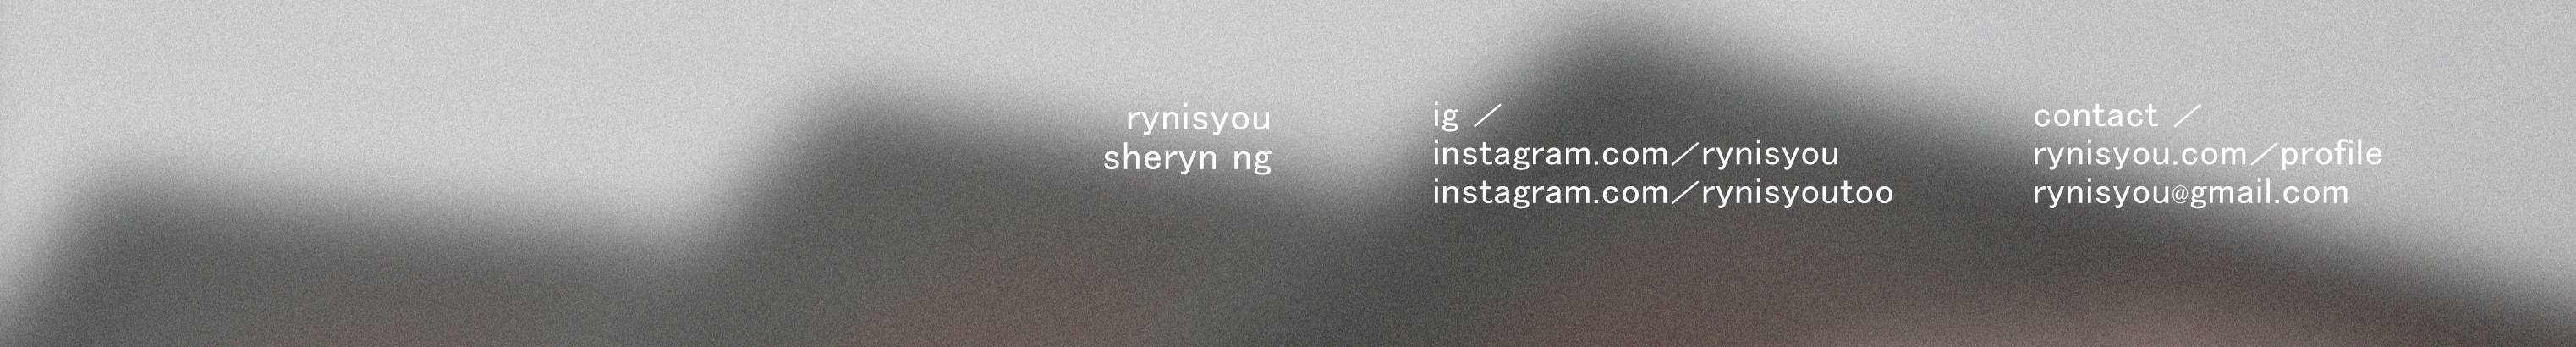 RYNISYOU (Sheryn Ng)'s profile banner